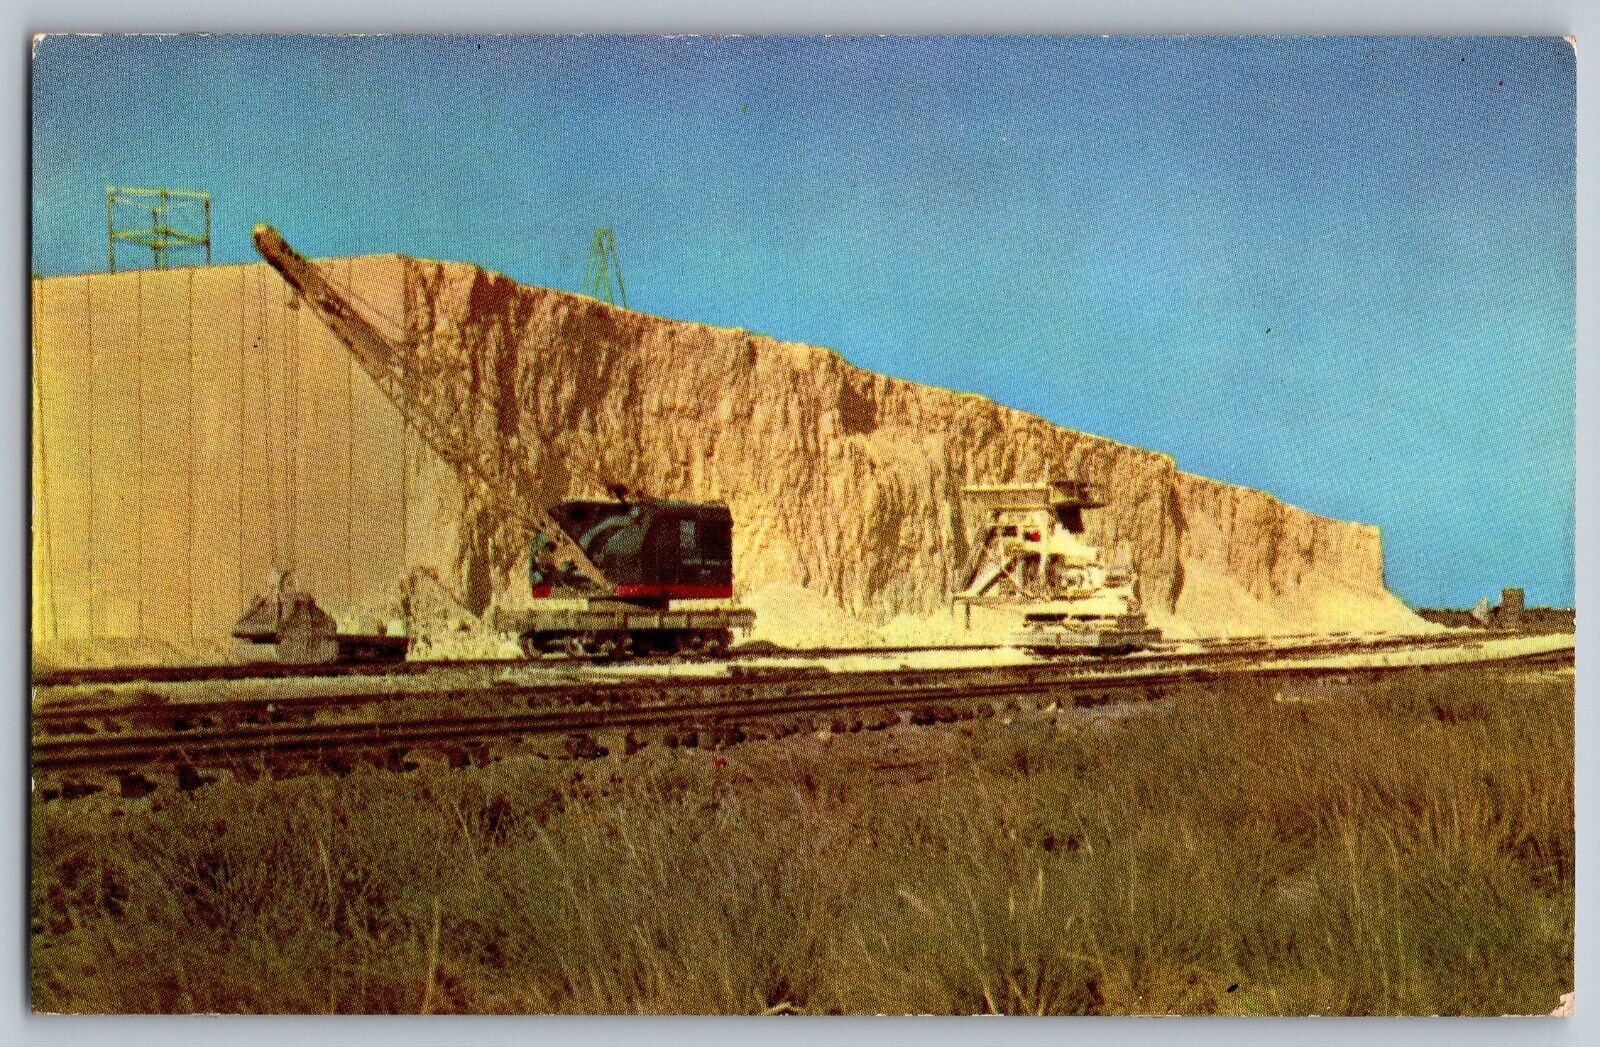 Galveston, Texas - Gulf Sulphur stockpile Company, Freeport - Vintage Postcard